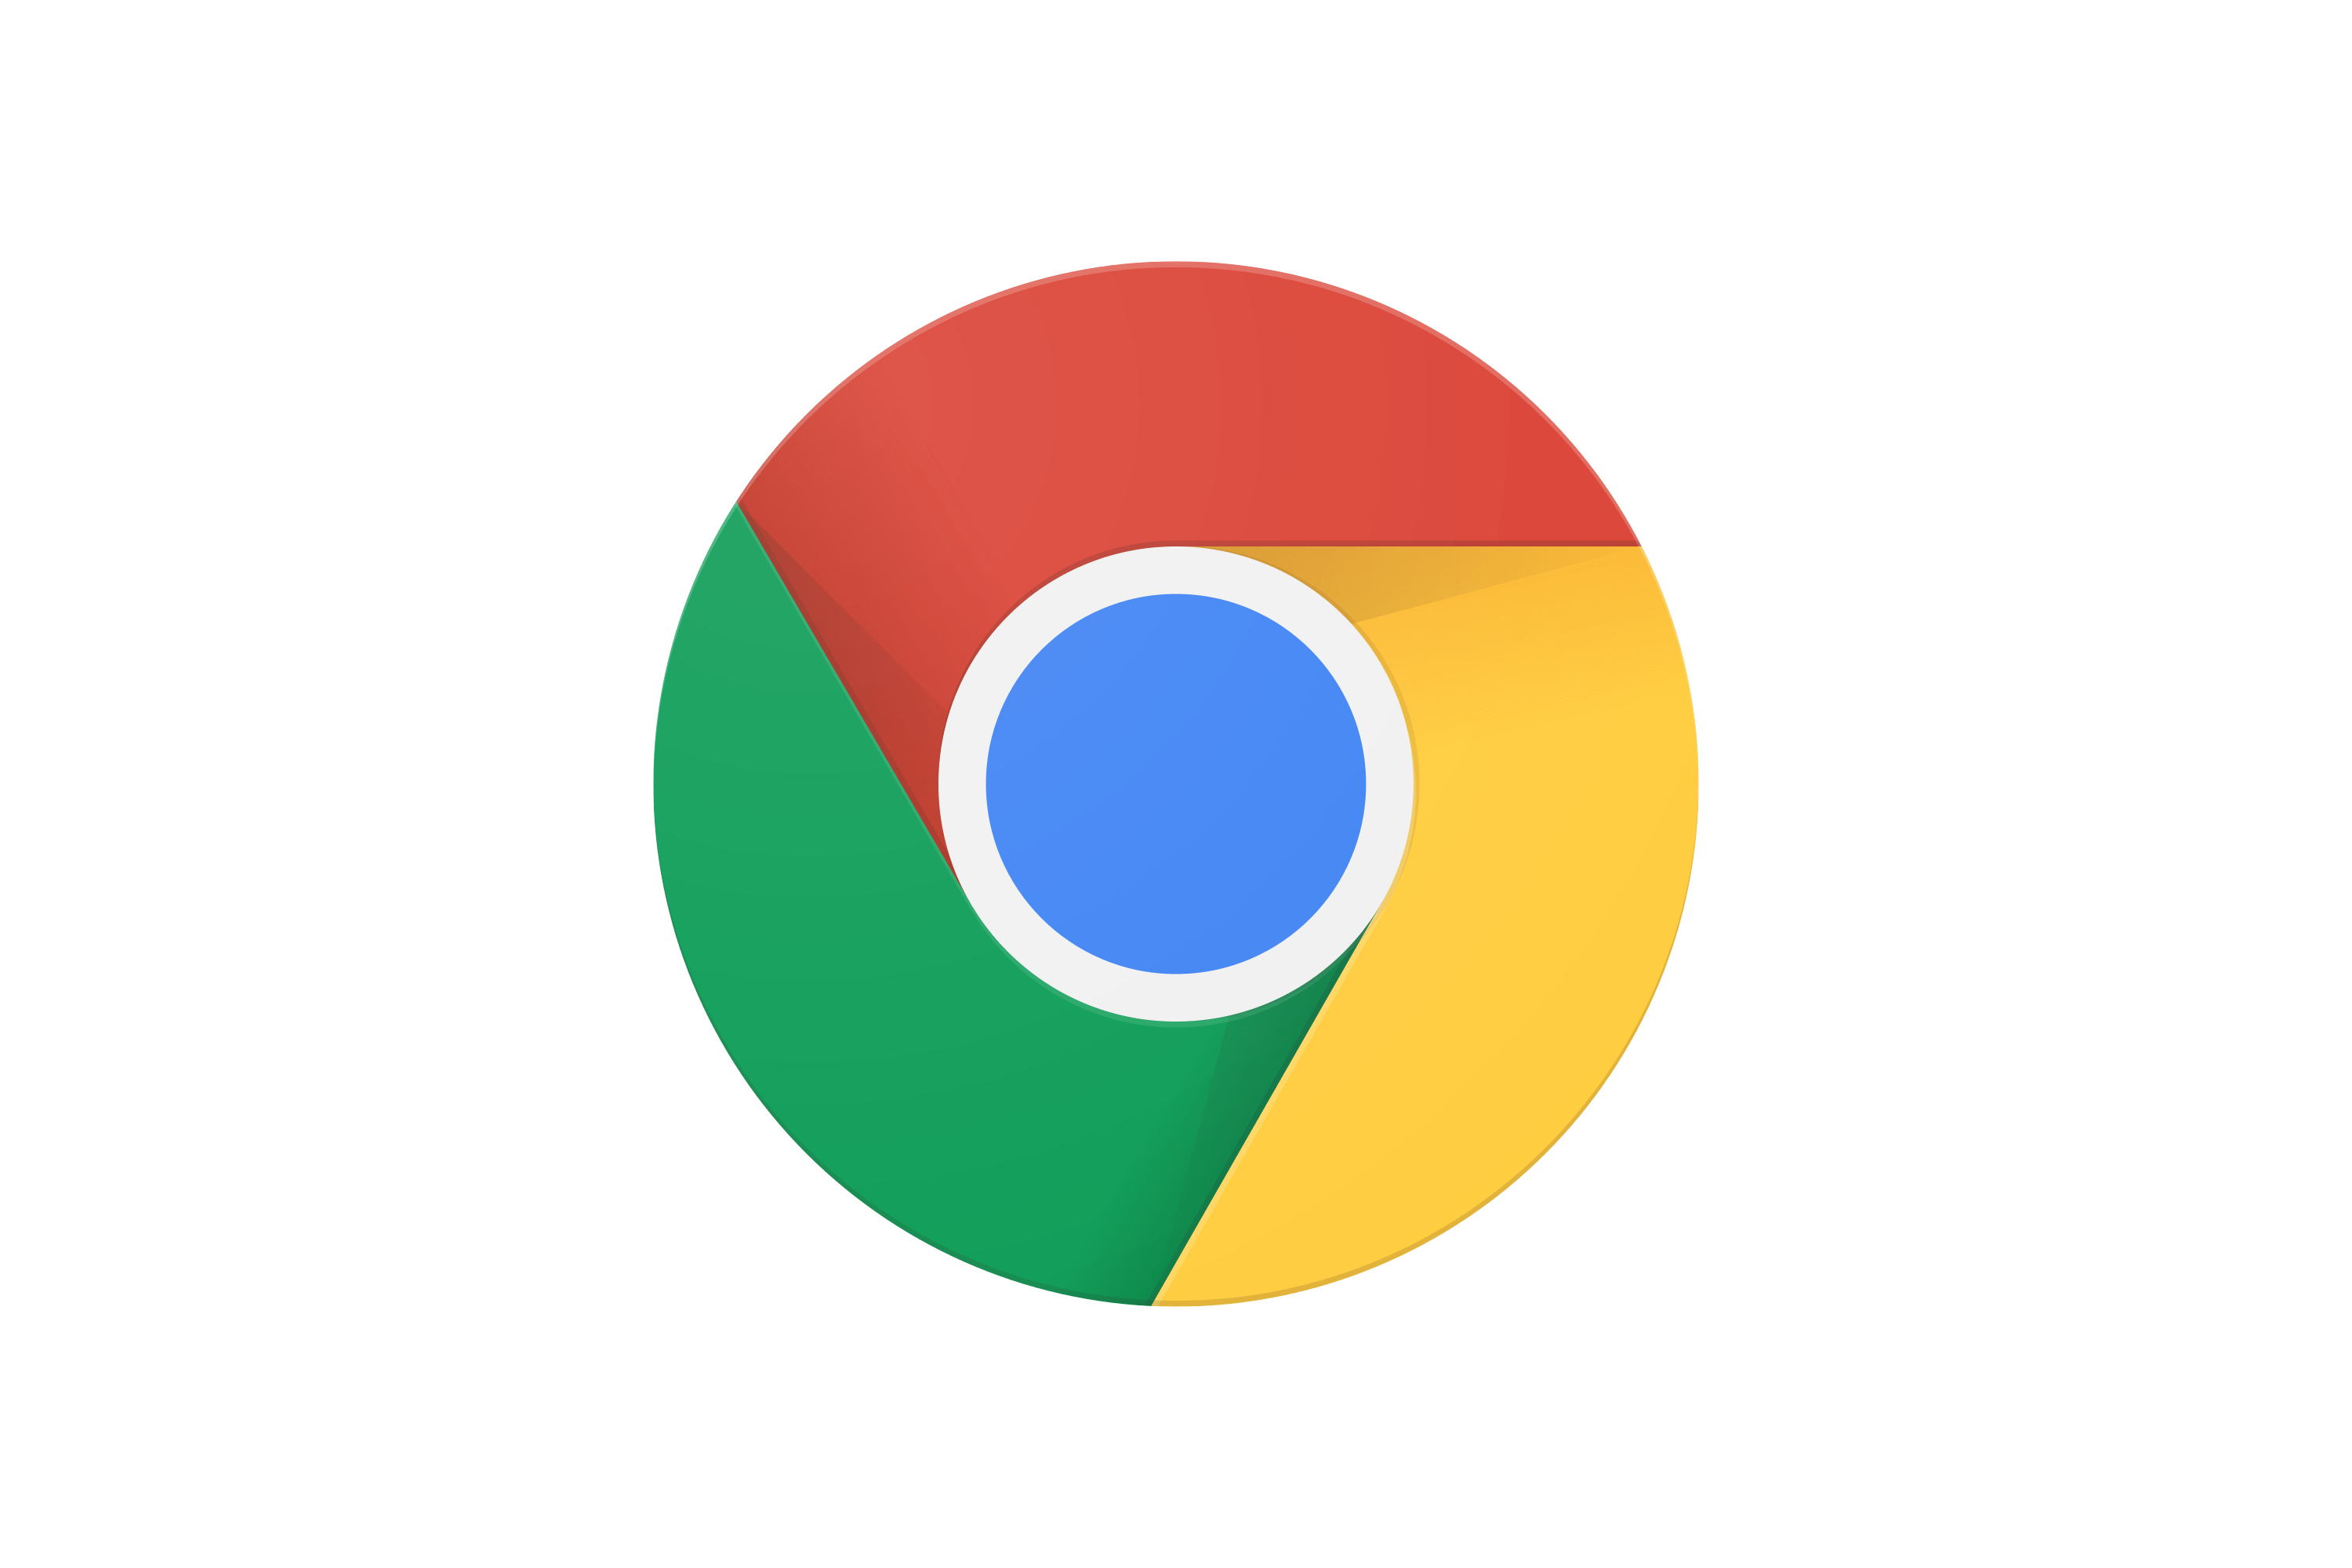 Download Google Chrome Logo in SVG Vector or PNG File